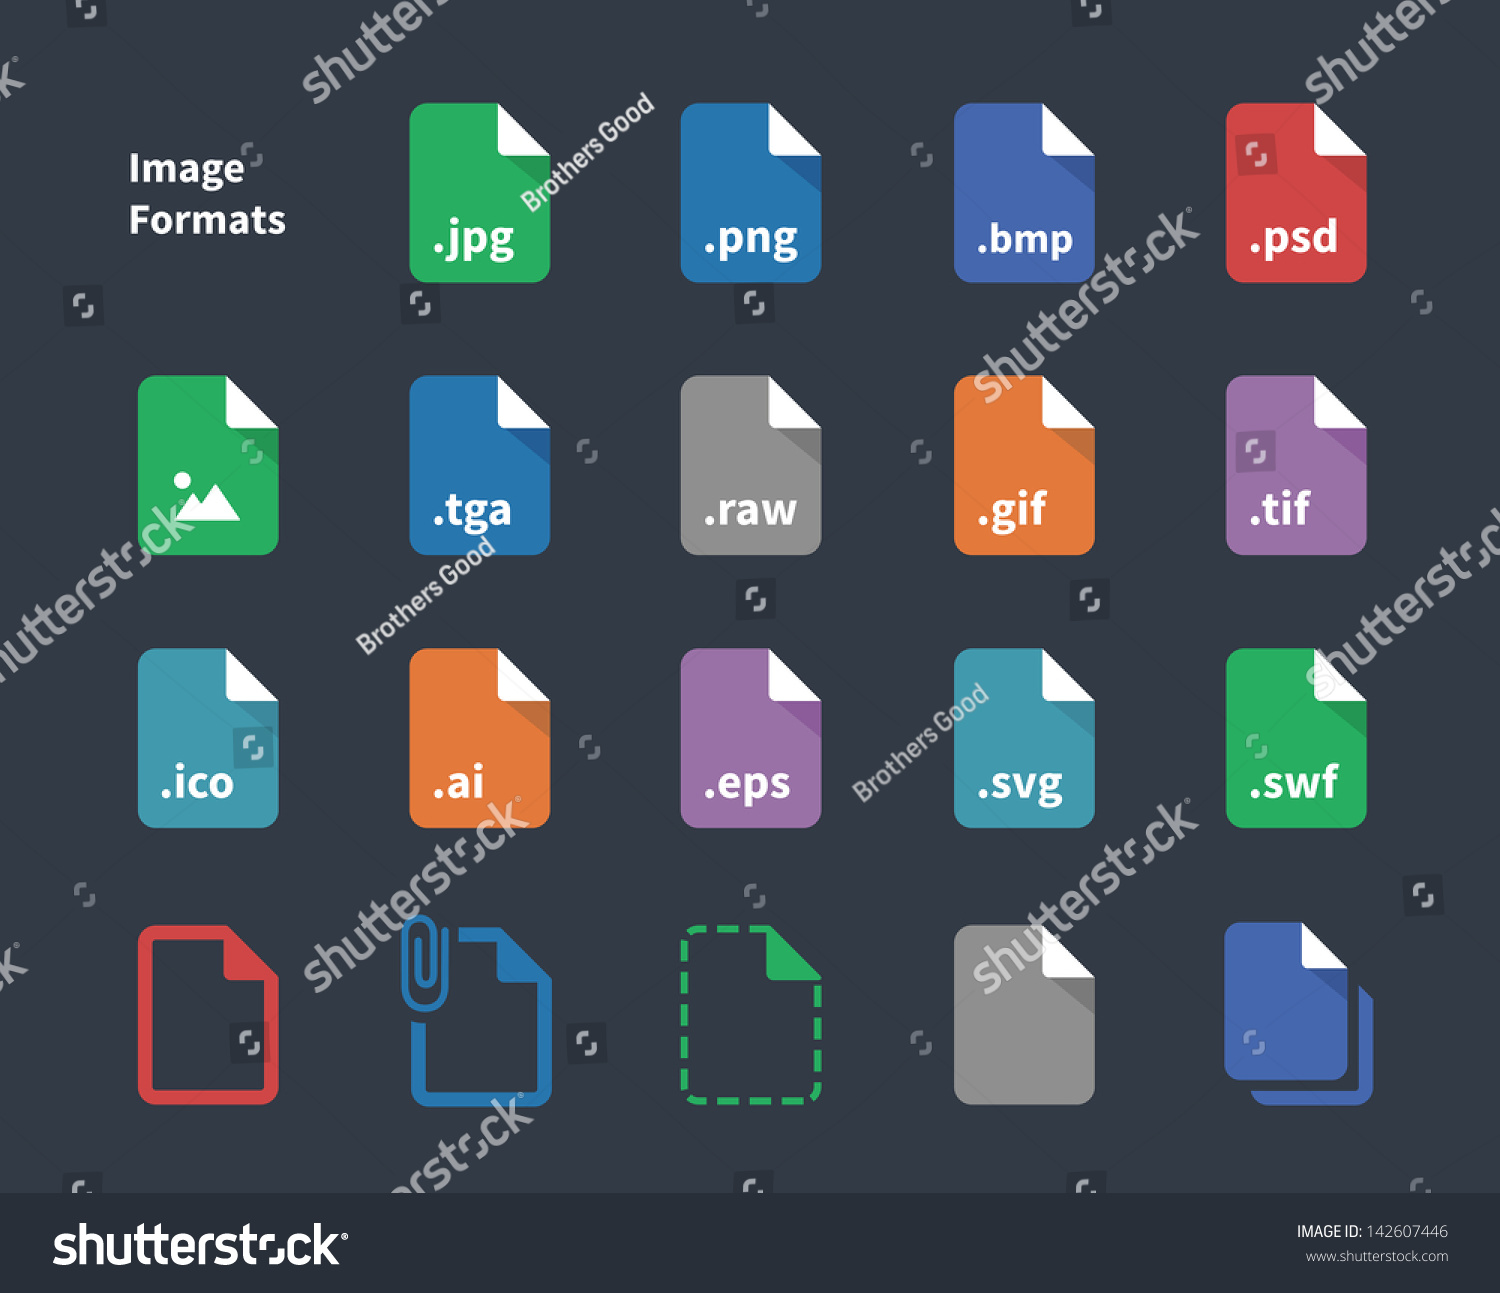 SVG of Set of Image File Formats and Labels icons. Vector illustration. svg